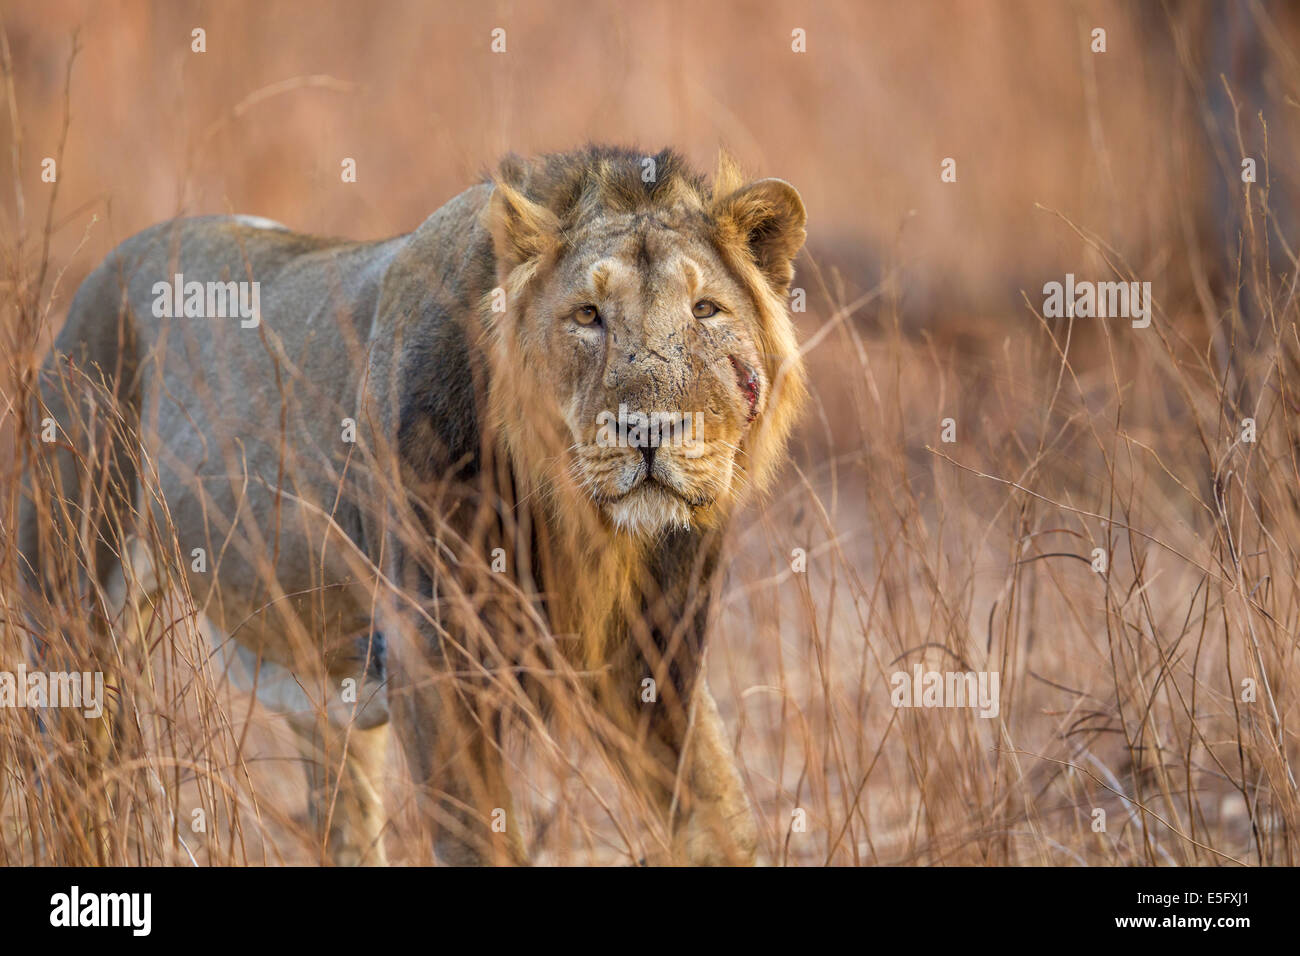 Homme Lion d'Asie (Panthera leo persica) à Rif forêt, Gujarat, Inde. Banque D'Images